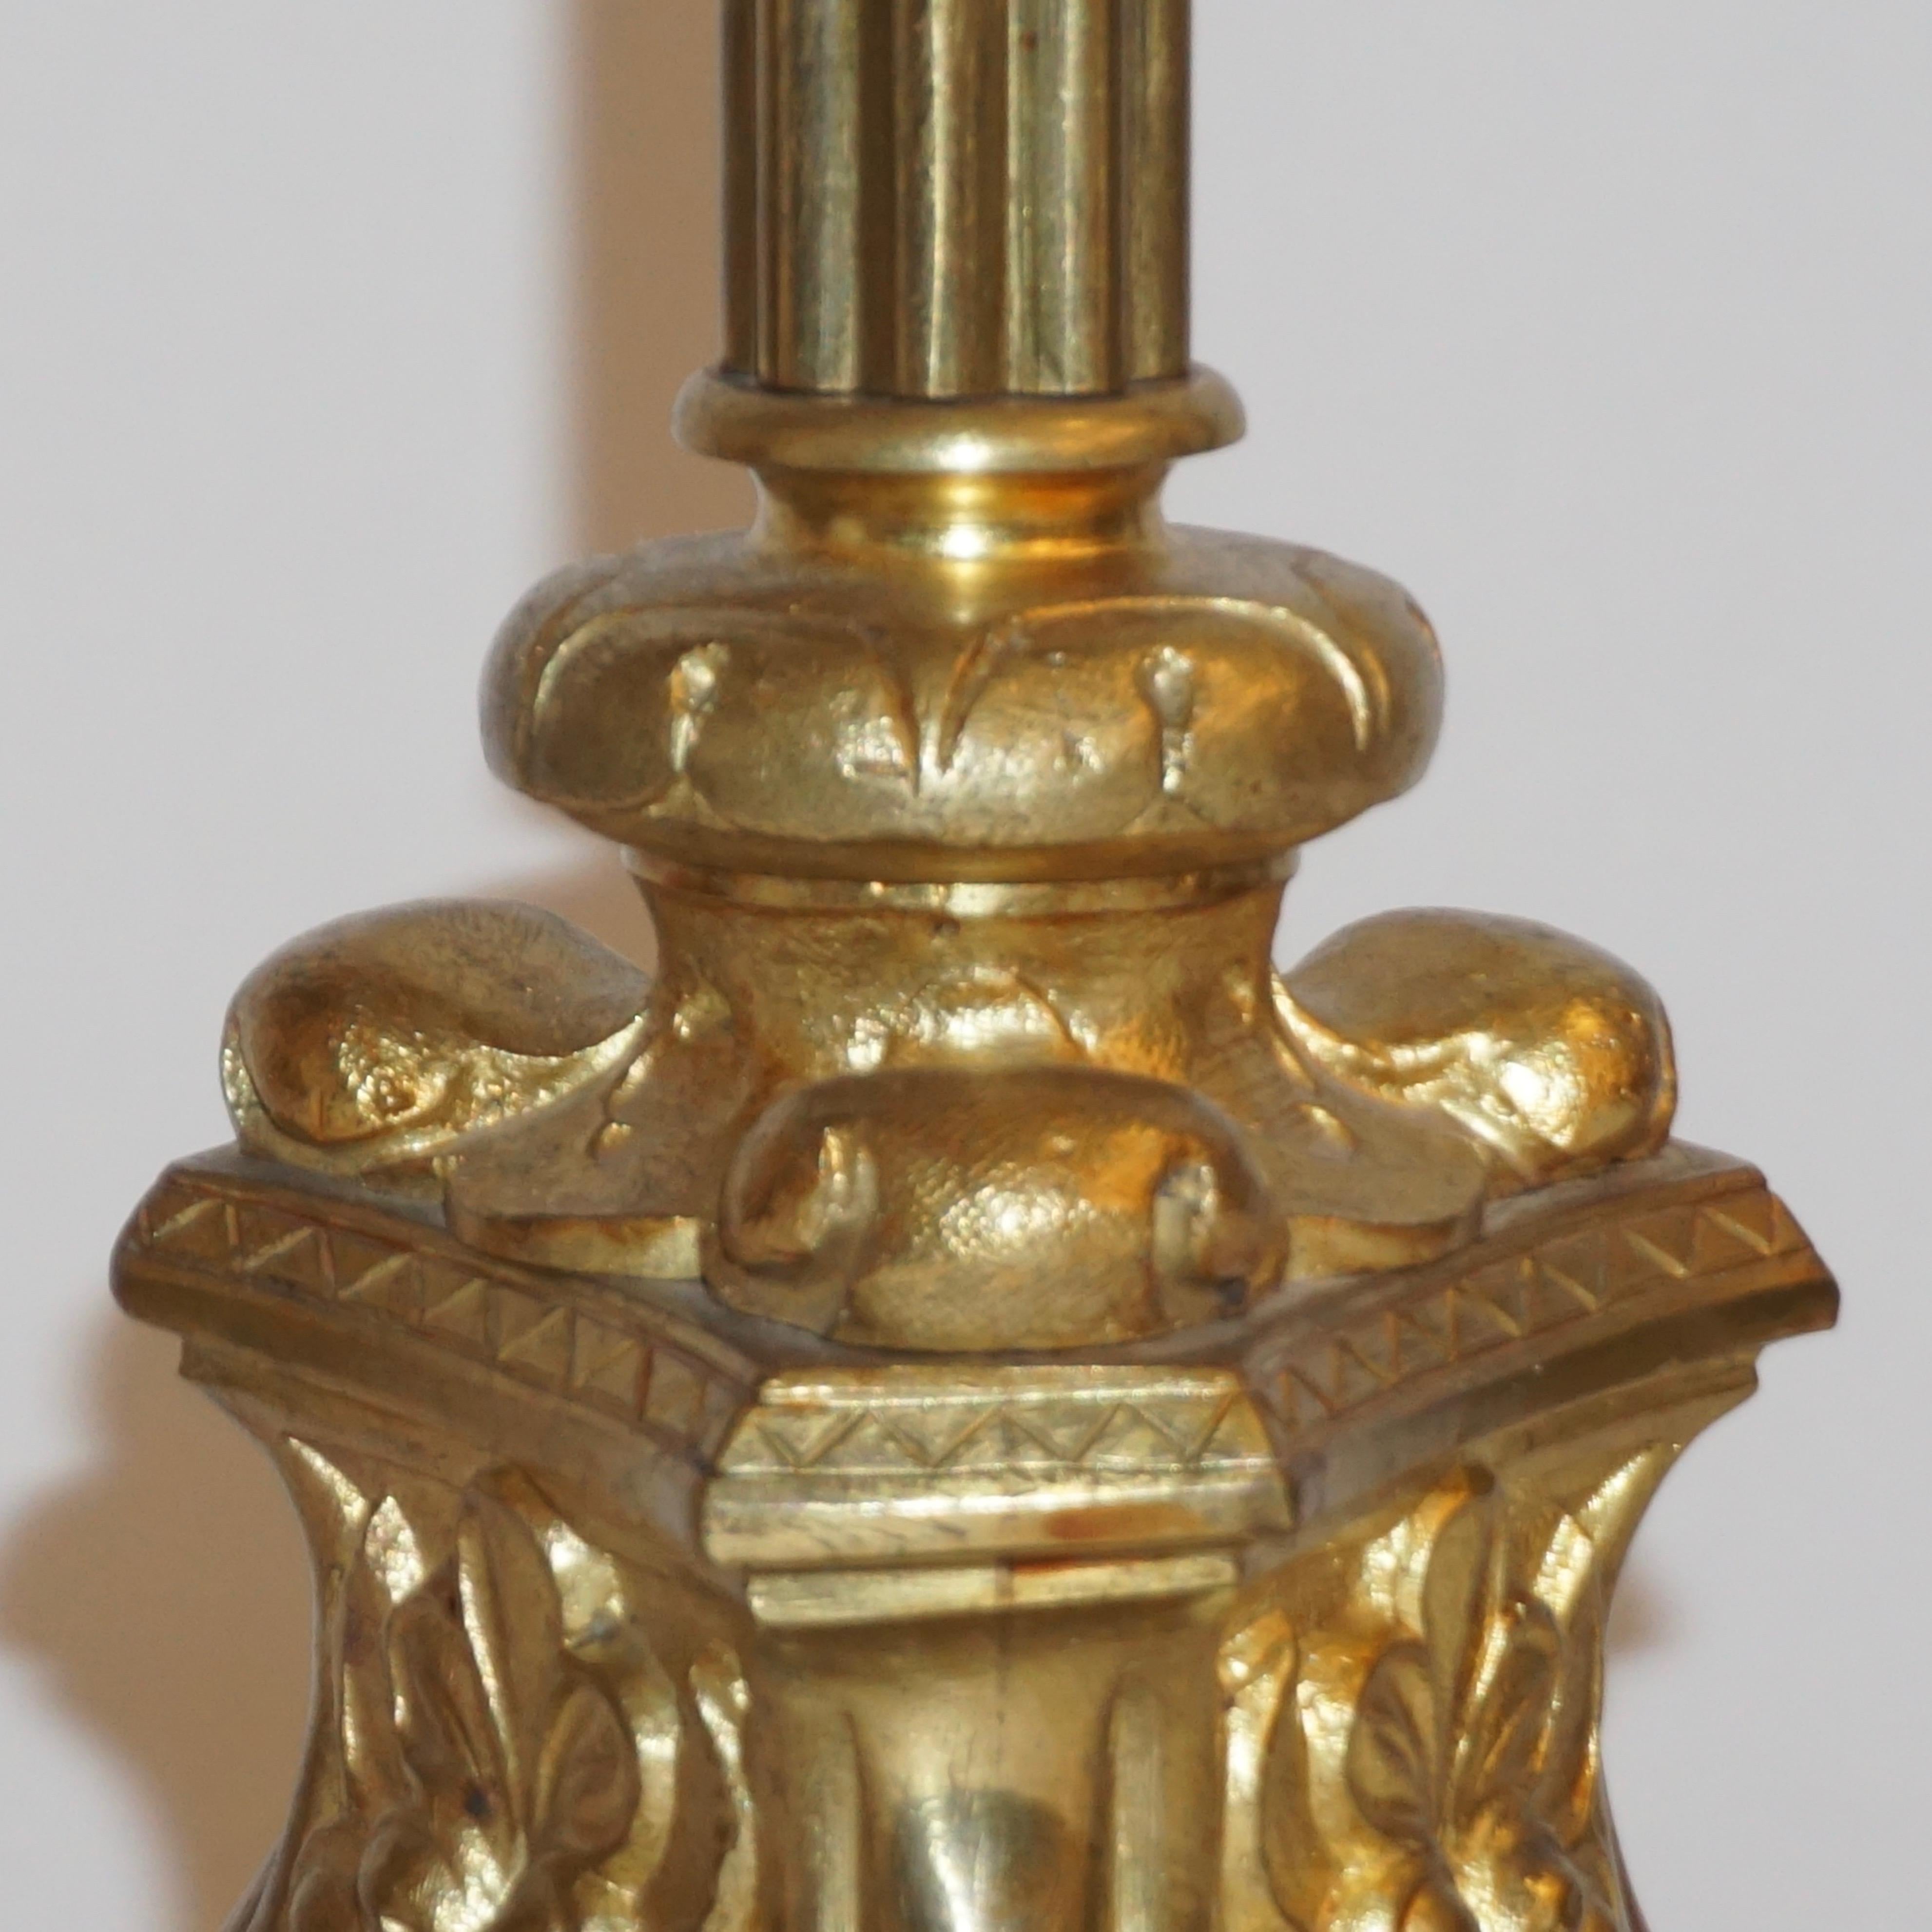 1880s French Baroque Revival Gilt Bronze Ormolu Pricket Candlestick 2